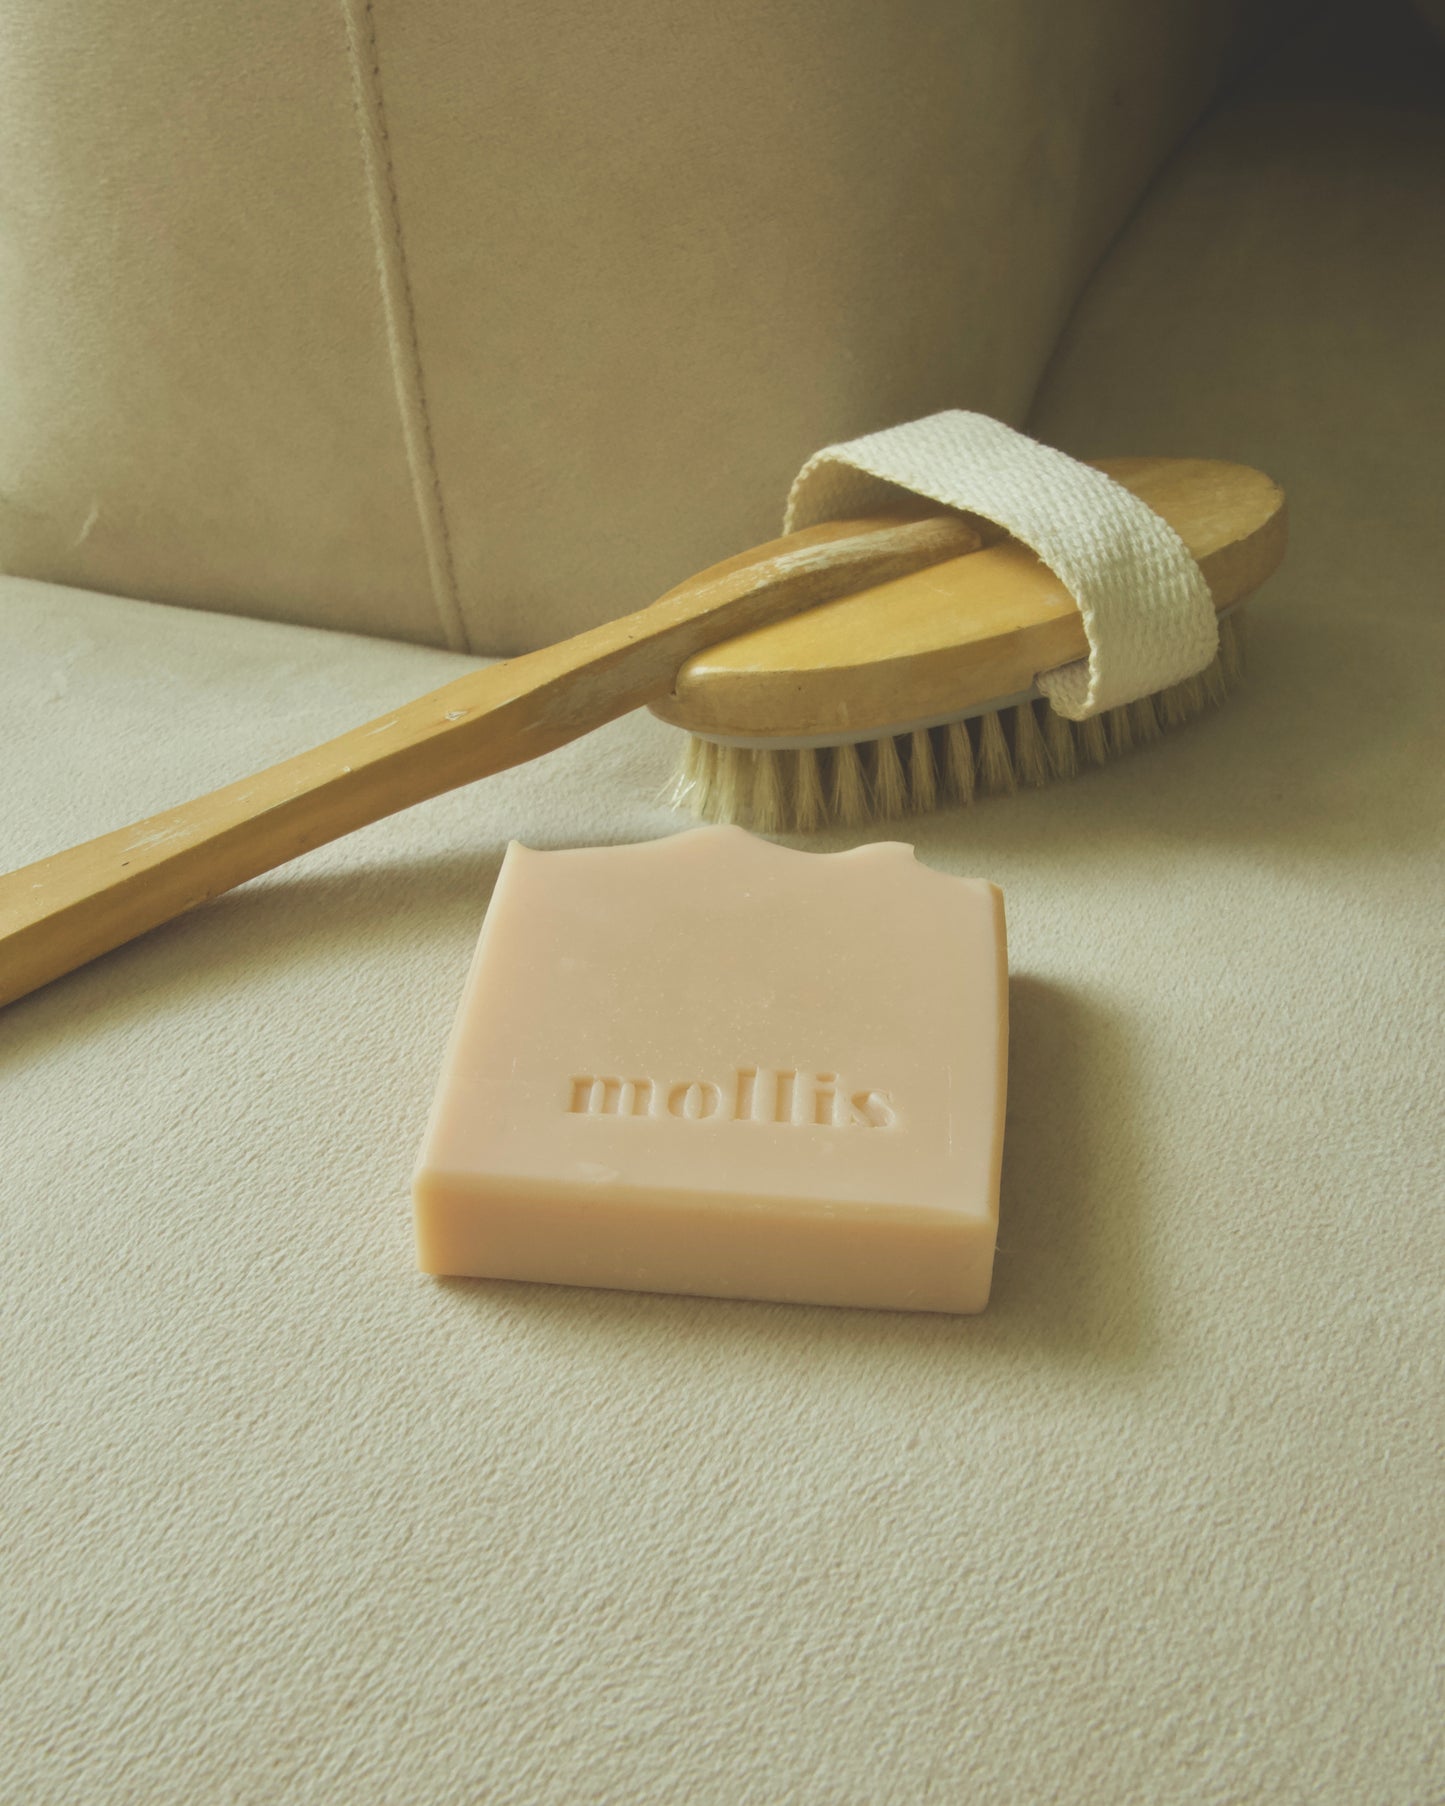 Sweet Sage Soap for Dry & Sensitive Skin